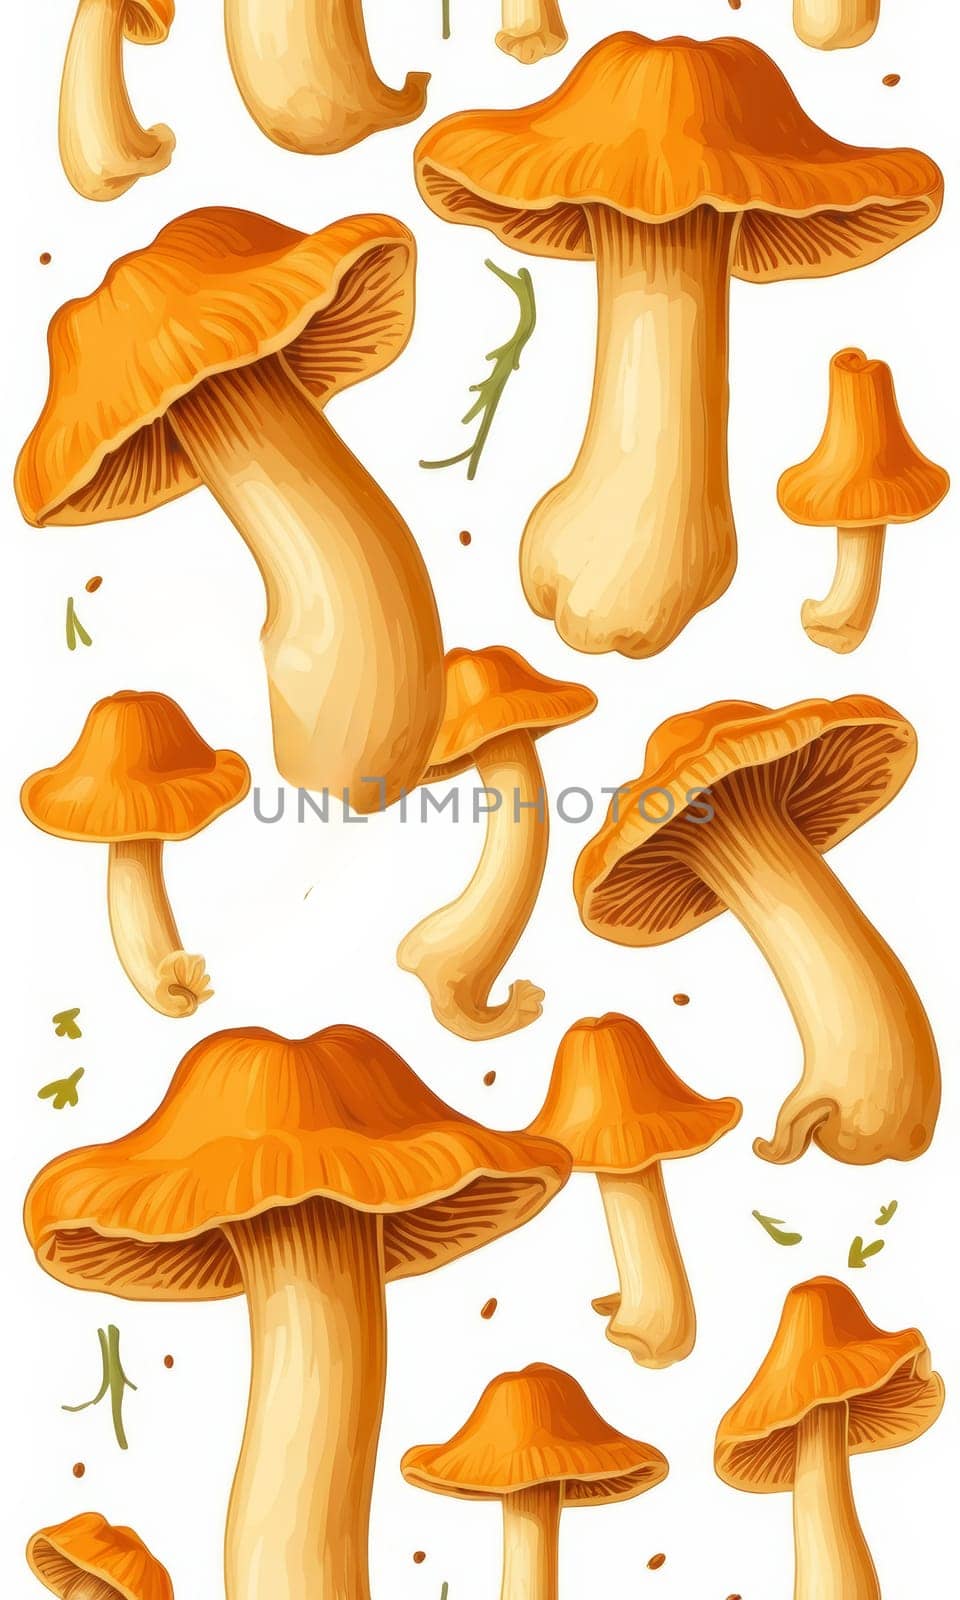 pattern with chanterelle mushrooms. illustration